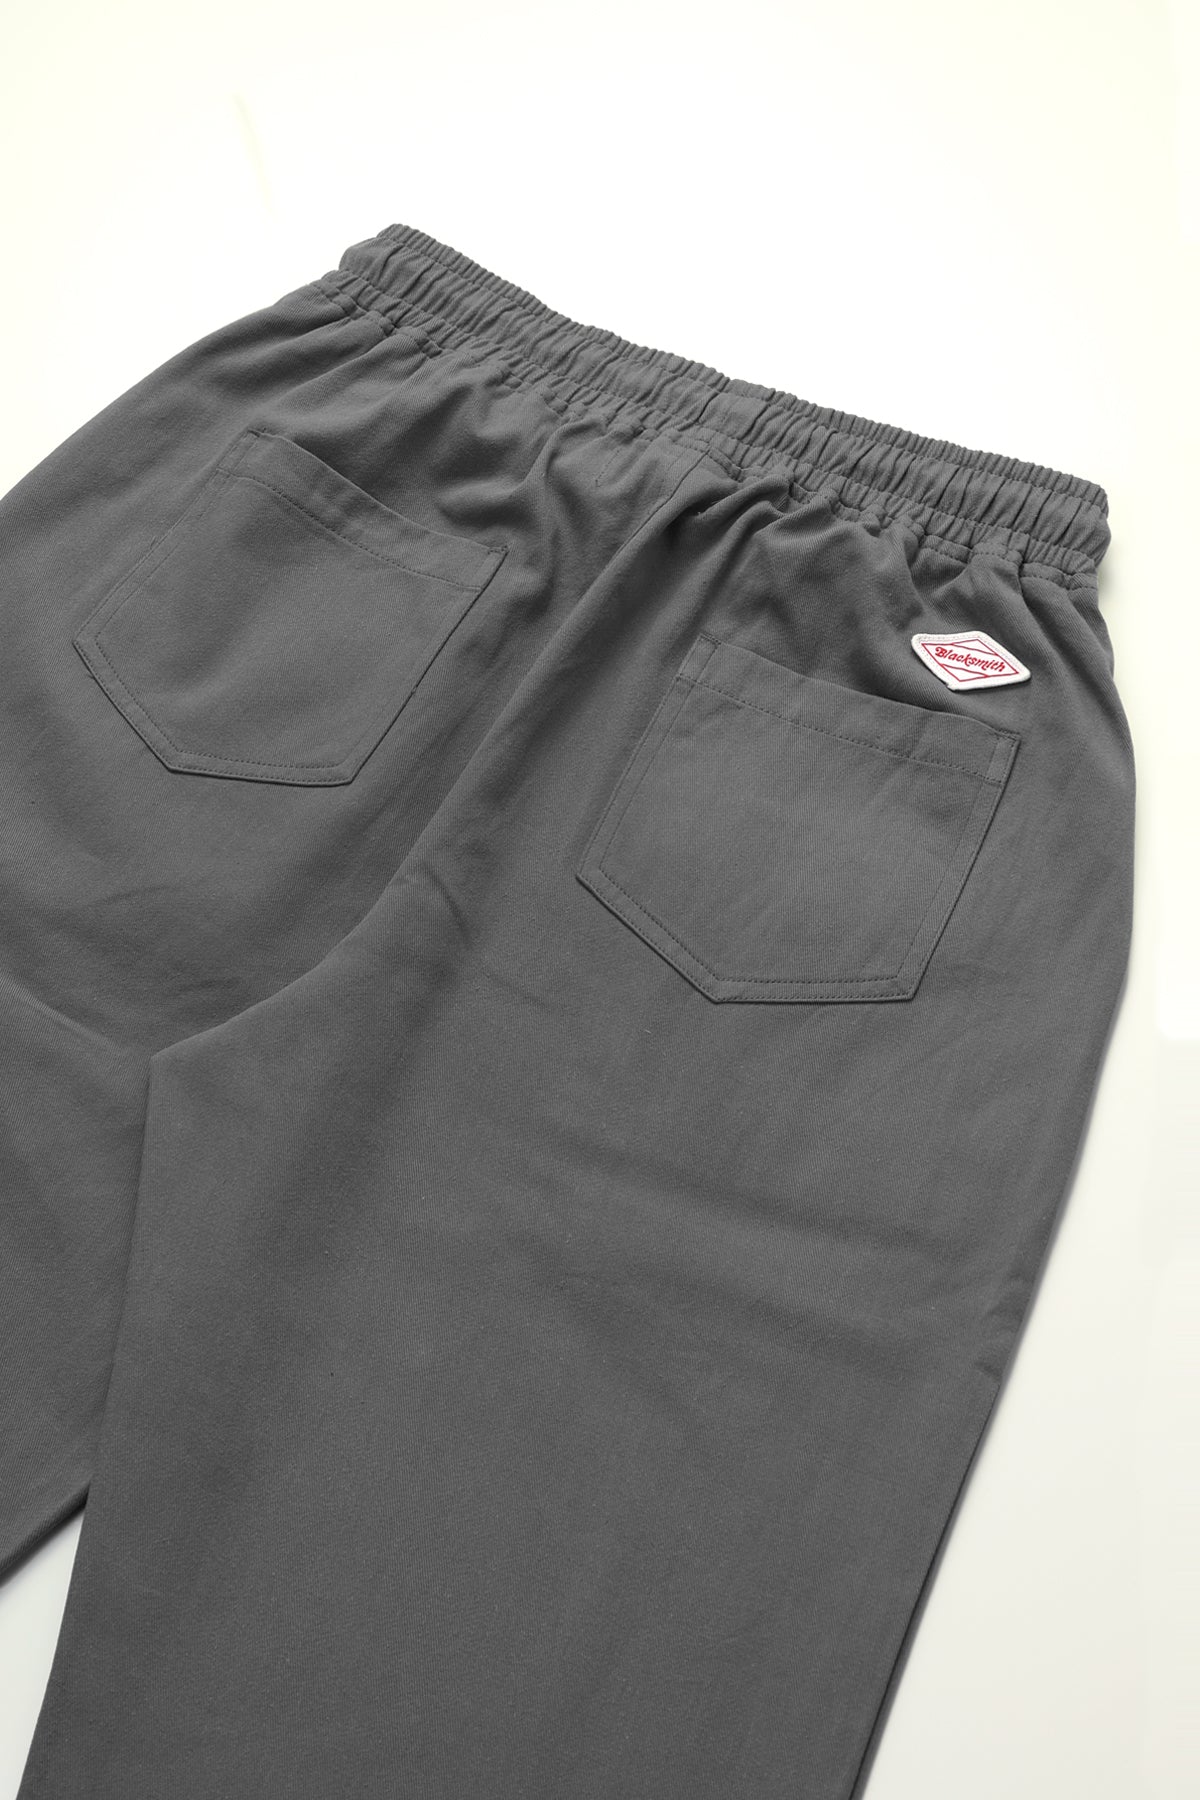 Blacksmith - Beach Cargo Pants - Grey